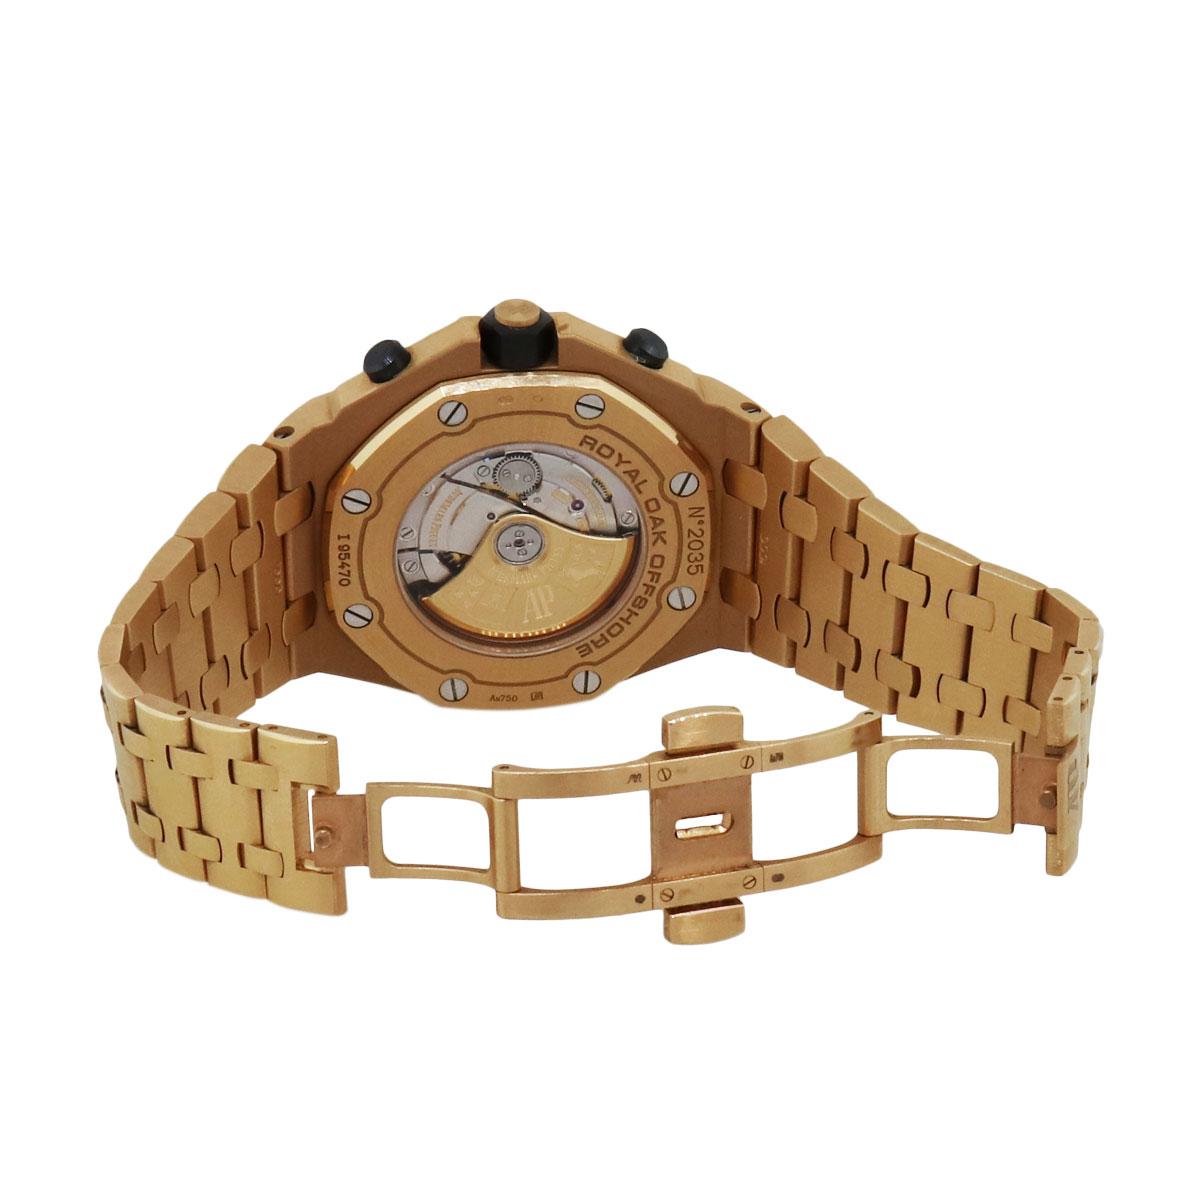 Men's Audemars Piguet Royal Oak Chronograph Watch